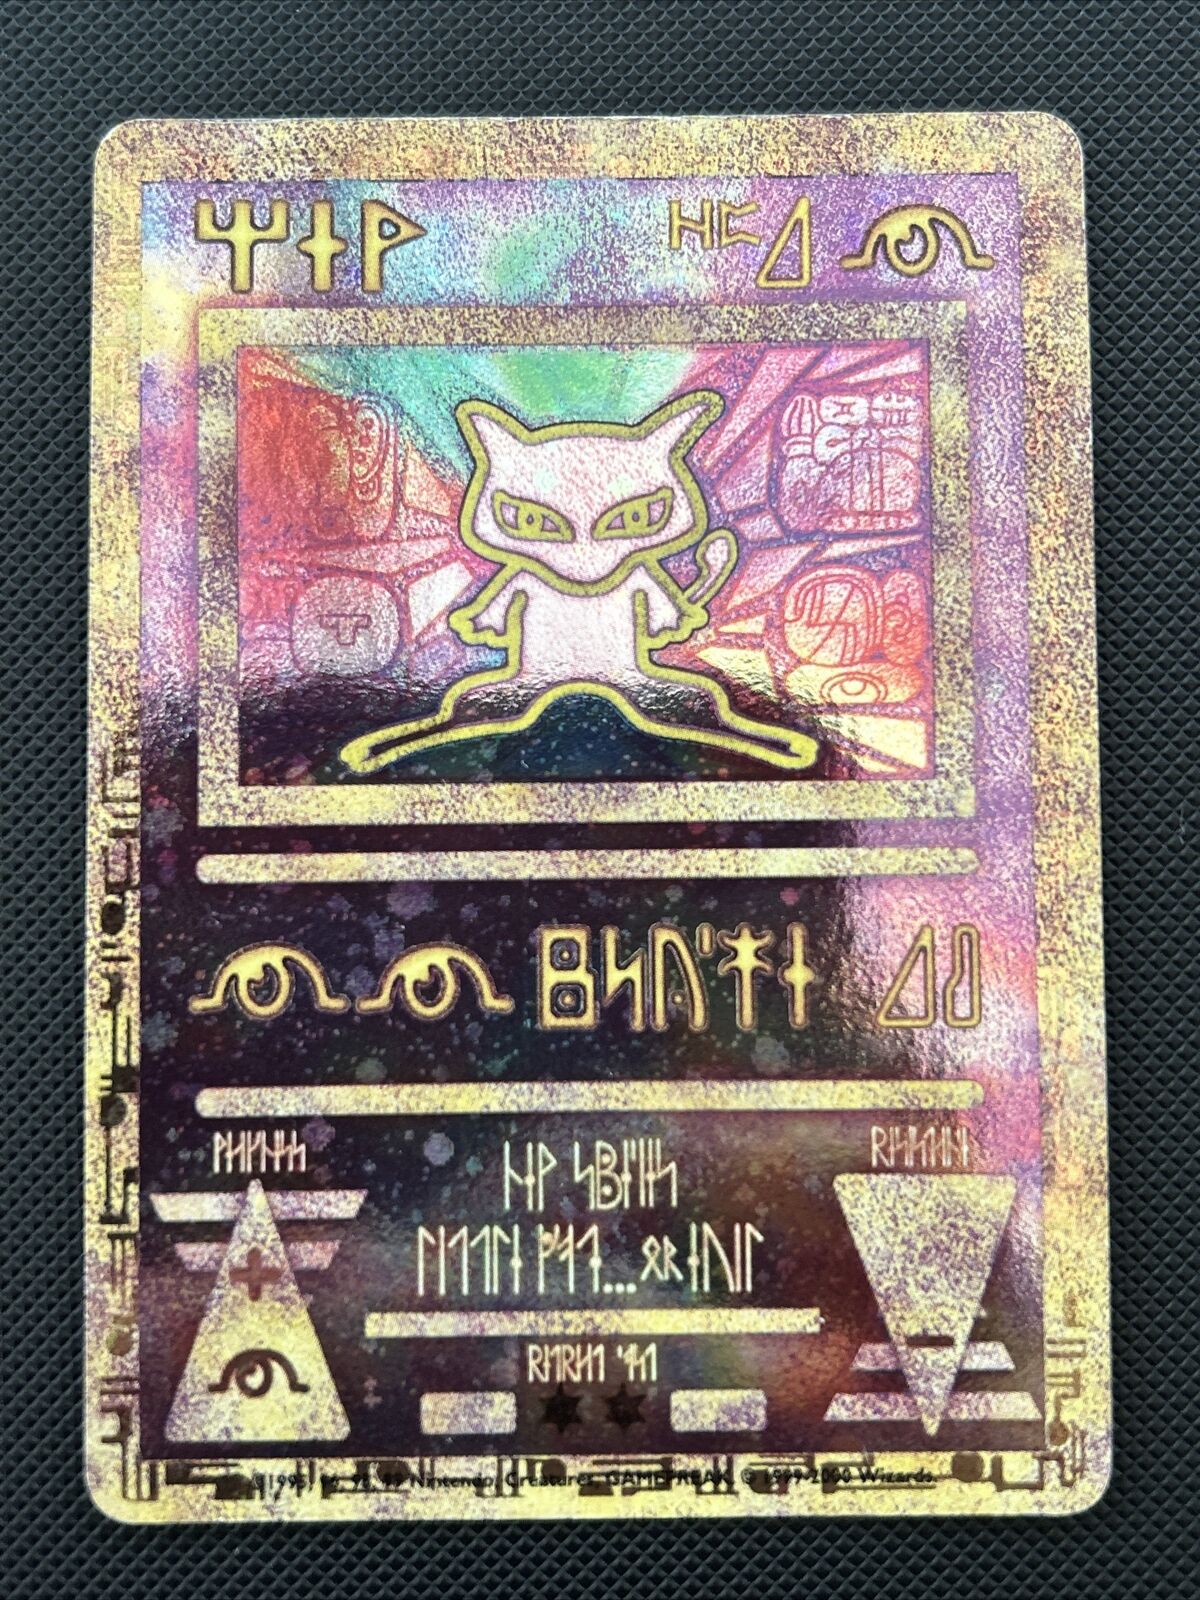 Ancient Mew - Pokemon 2000 Promo Card